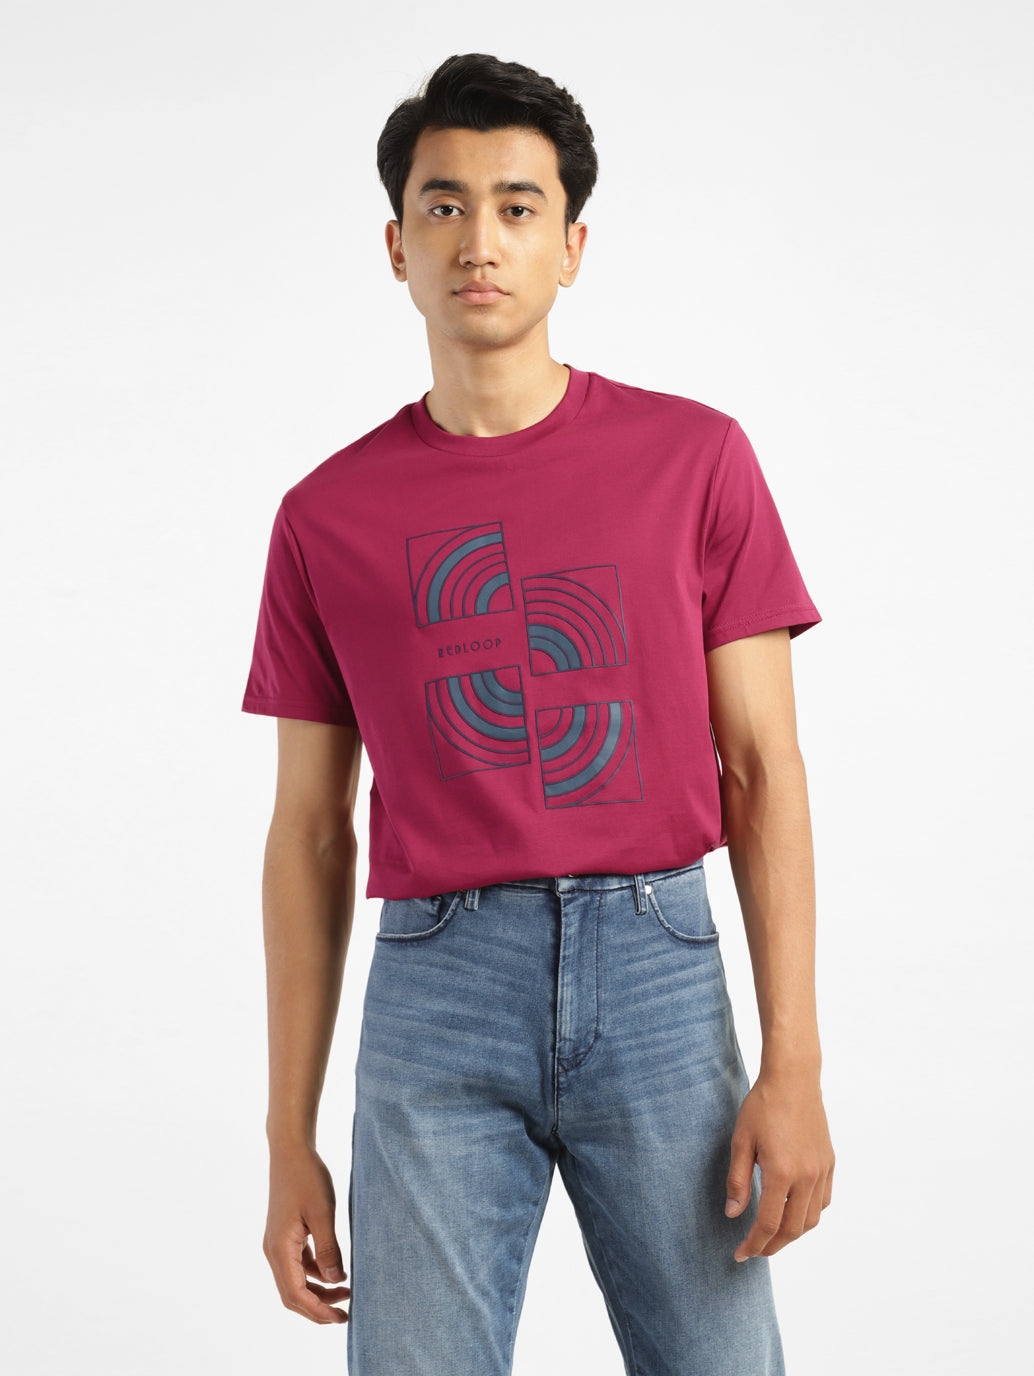 Men's Graphic Print Round Neck T-Shirts